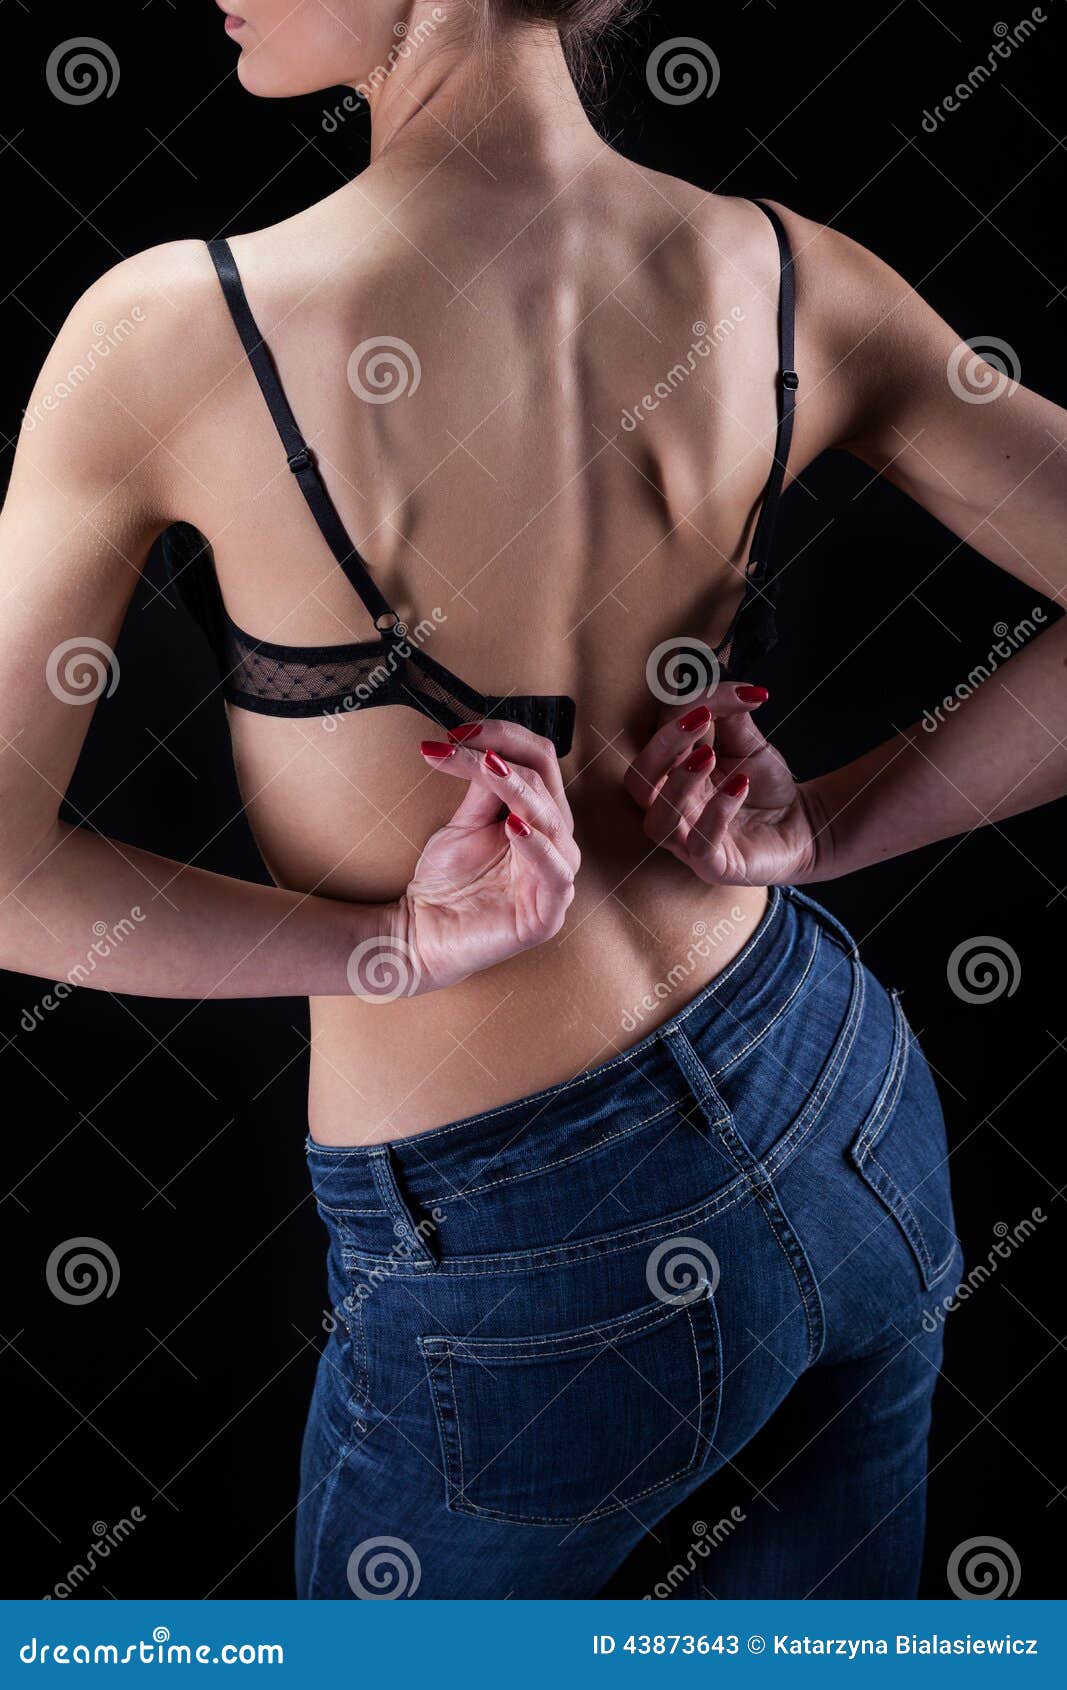 amila gayan add hot women taking off bra photo